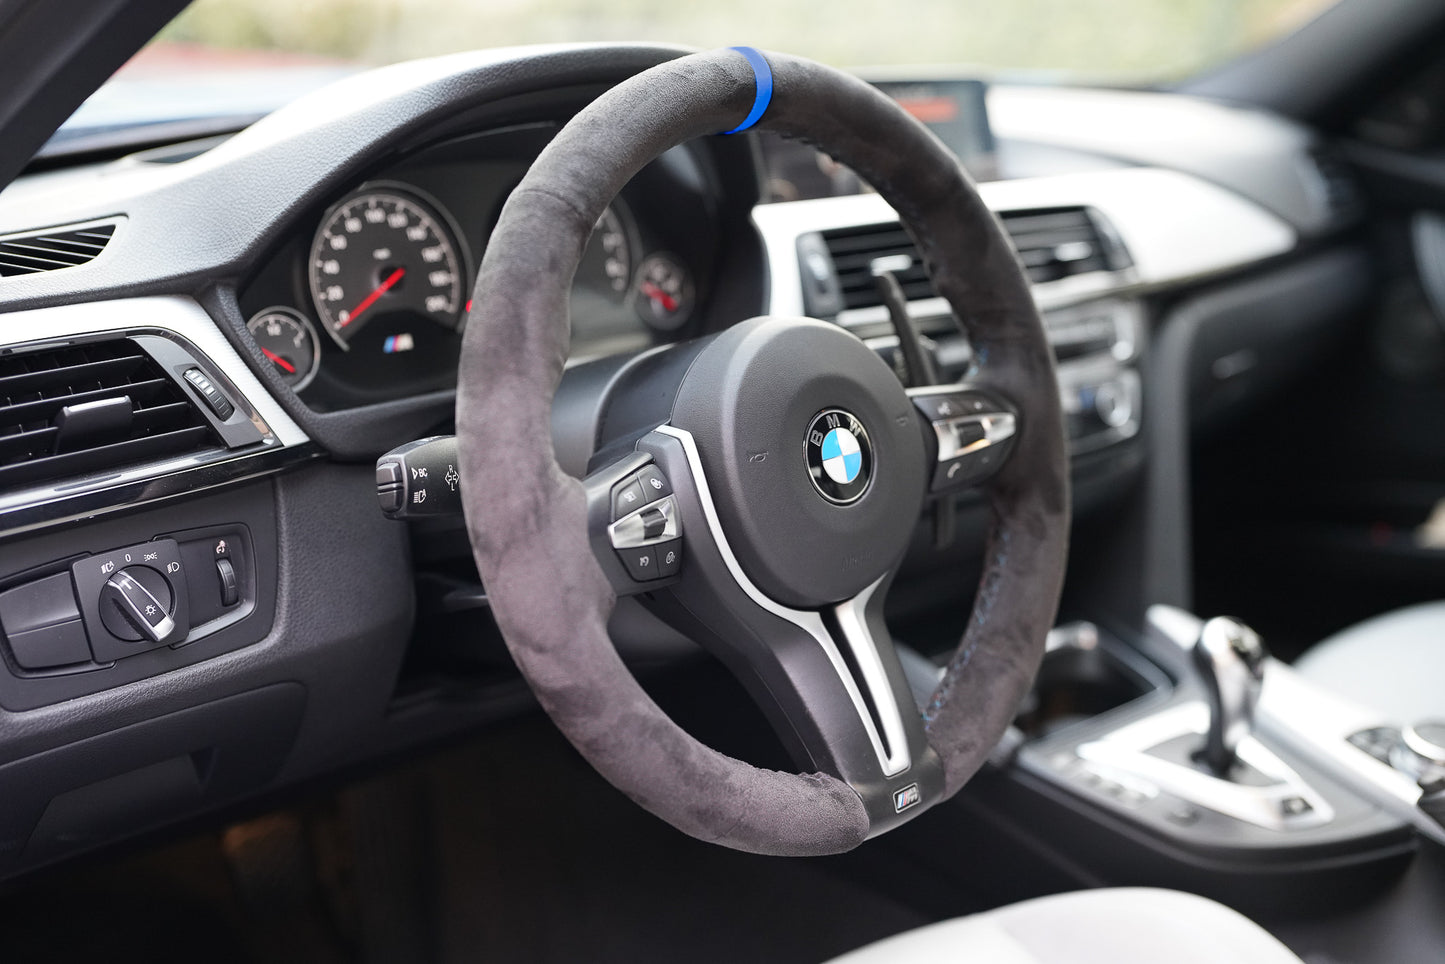 BMW F-Series Alcantara Suede Steering Wheel Cover DIY (Blue Stripe) - iCBL